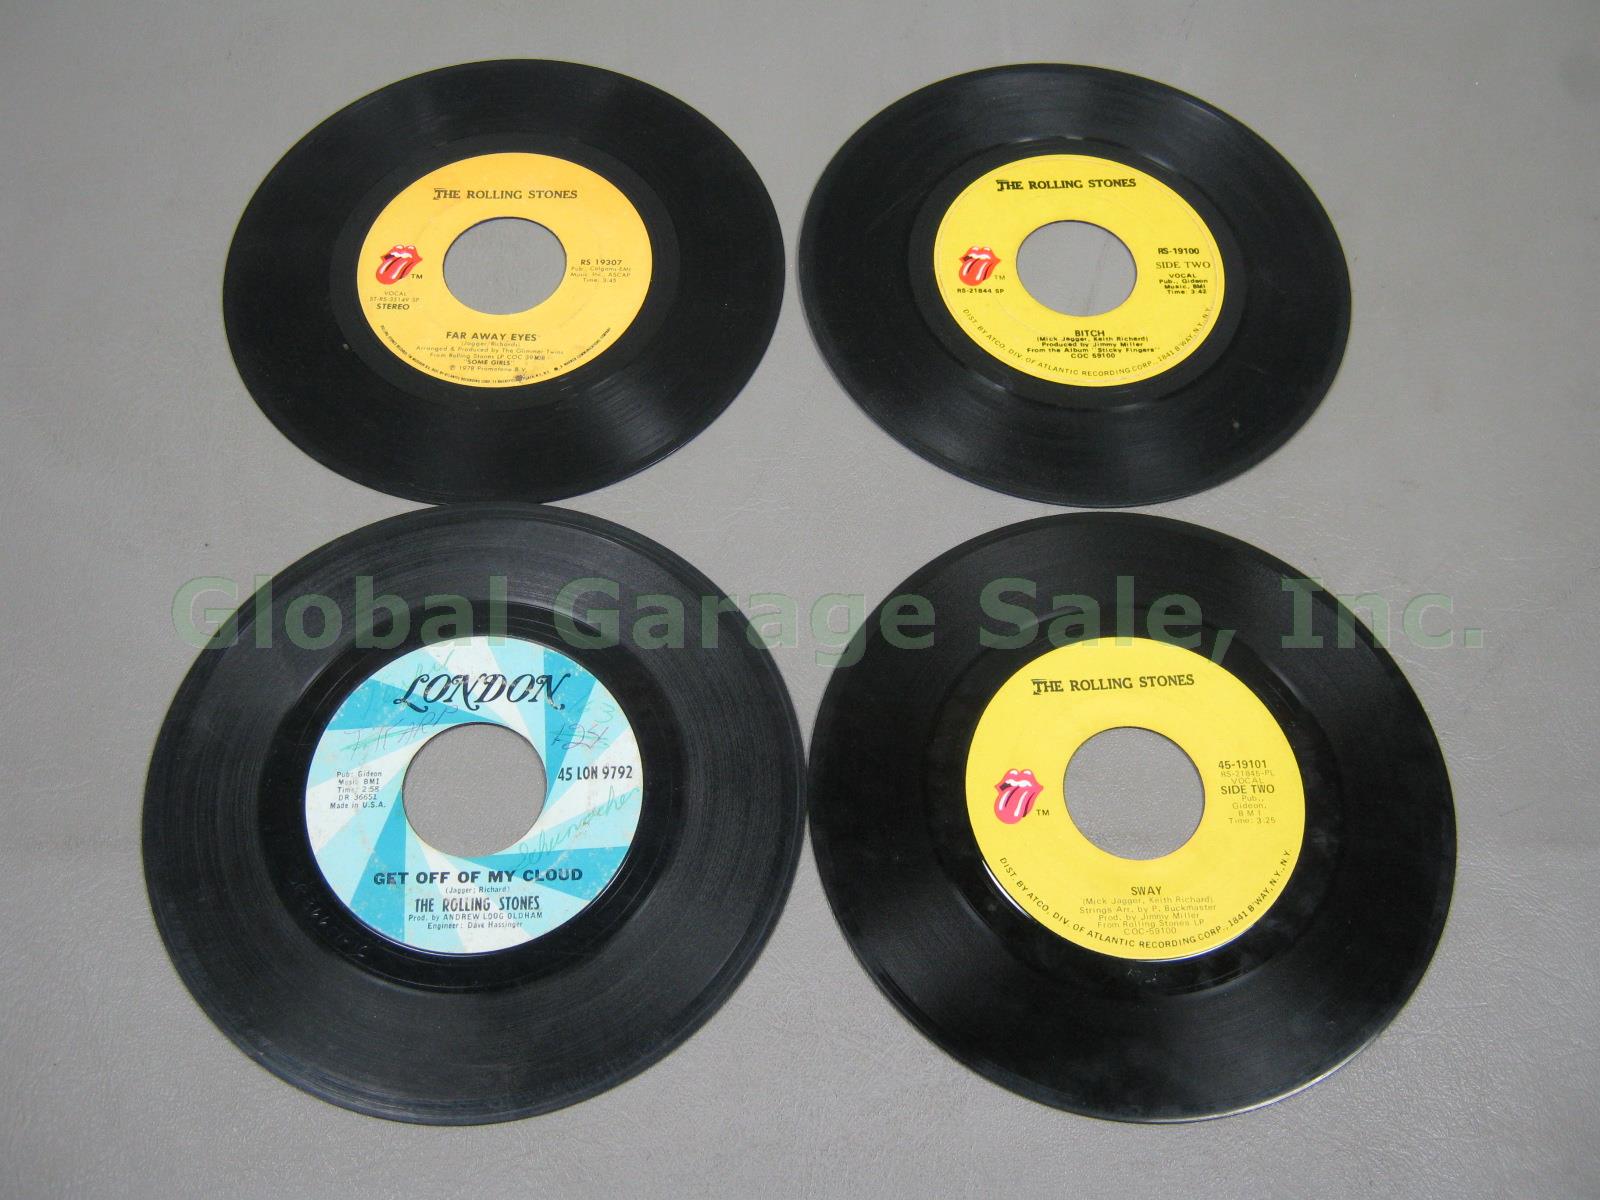 HUGE 45 Record Lot 500+ 50s-80s Elvis Presley Beatles Rock DJ Copy Promo Single 4